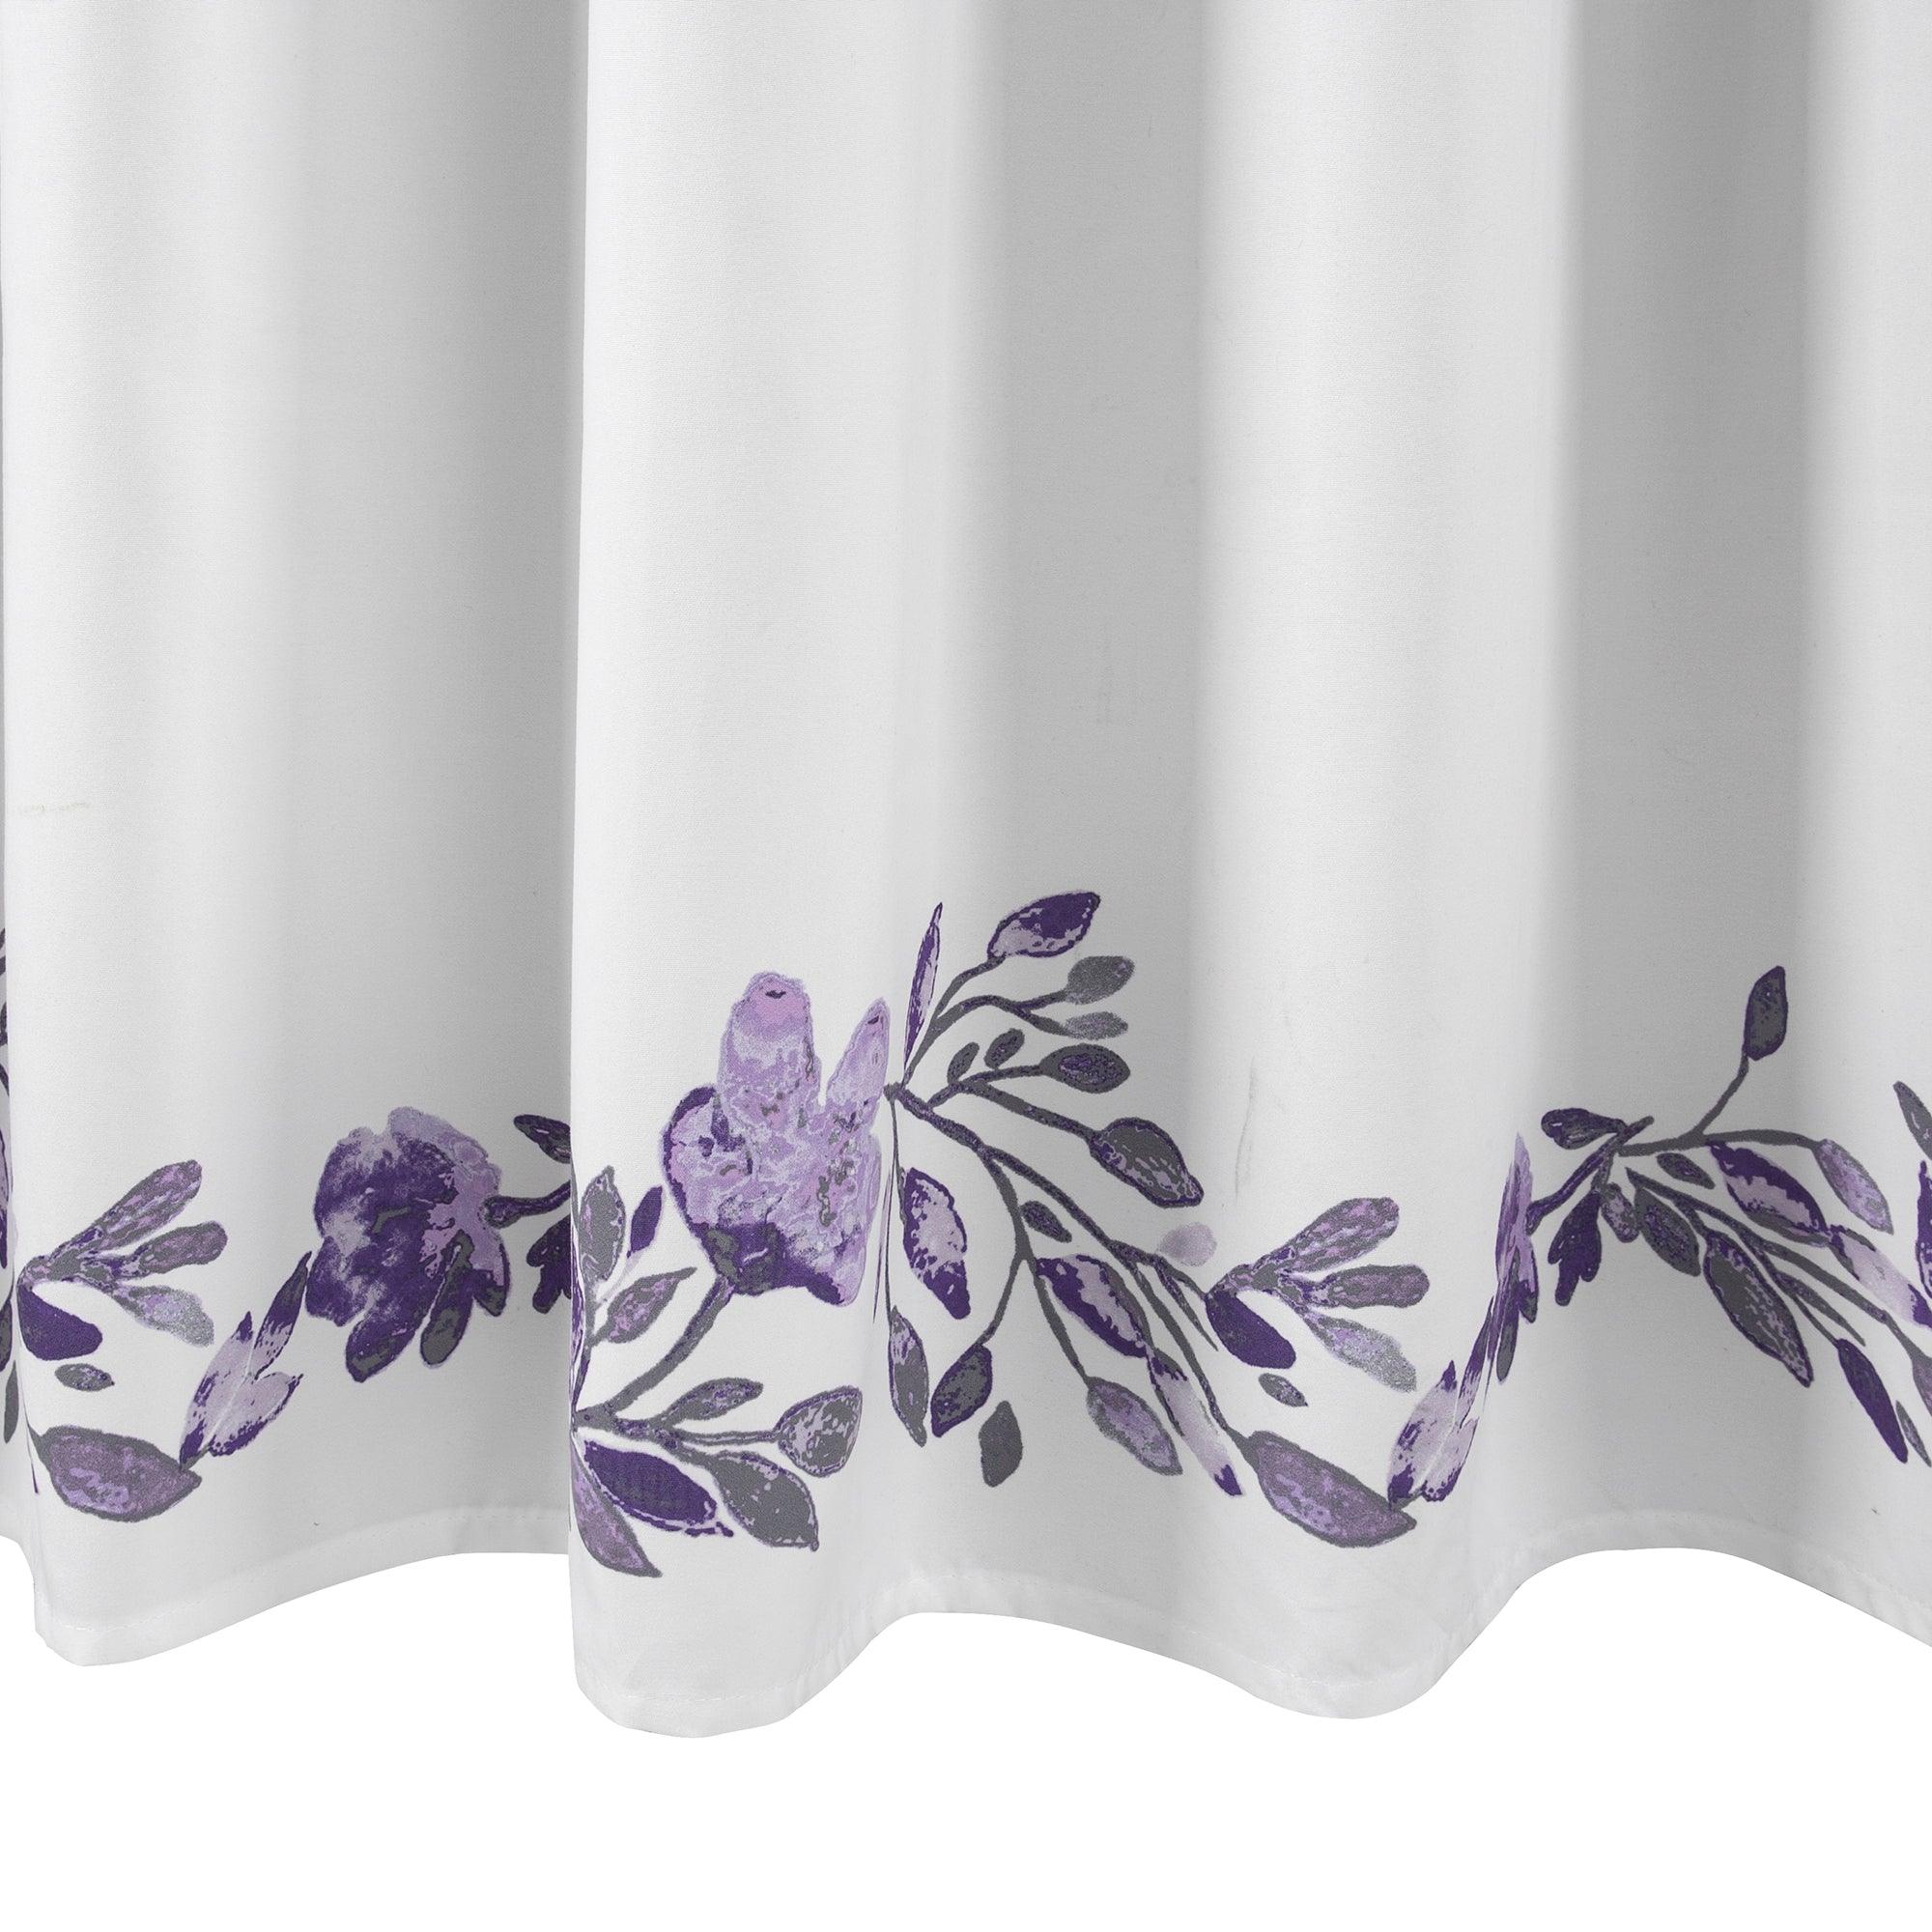 Tanisha Shower Curtain